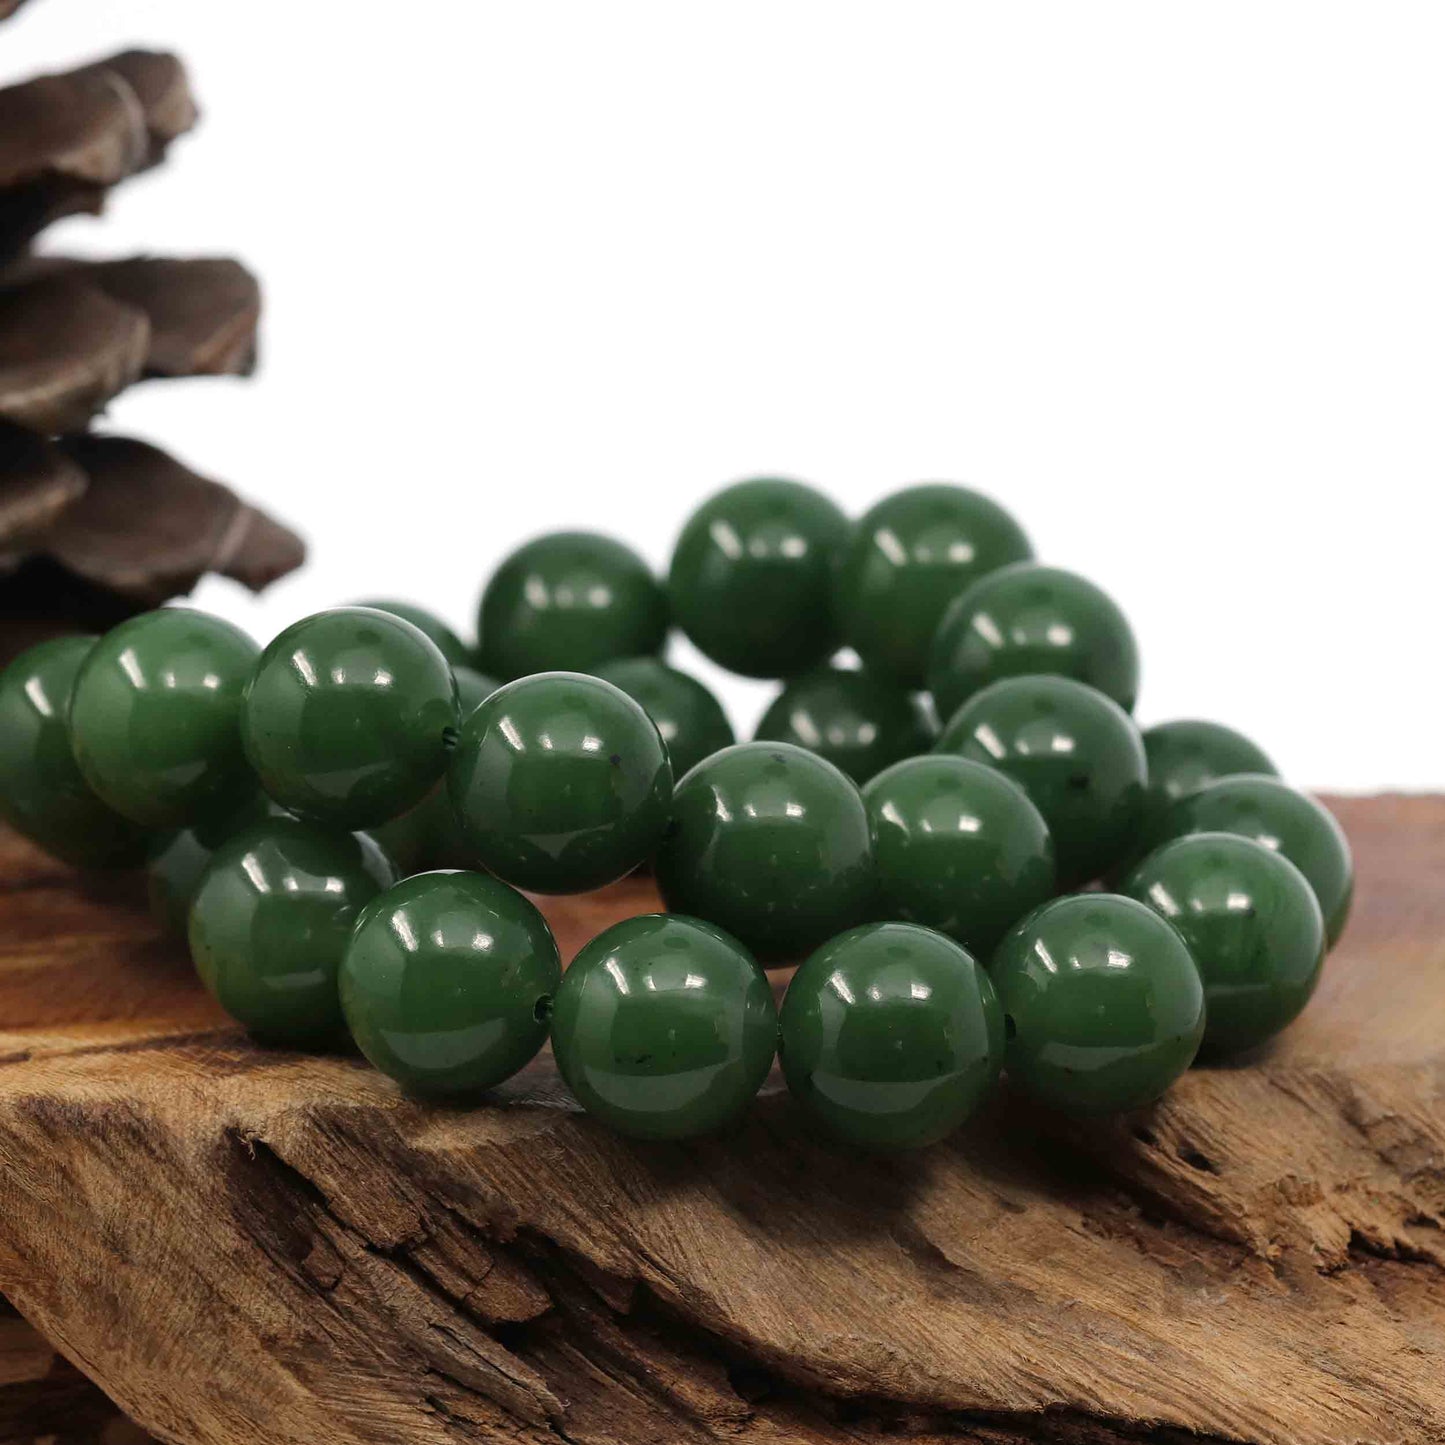 High RealJade® Co. Genuine Green Nephrite Jade Large Round Beads Men's Bracelet( 14.8mm )